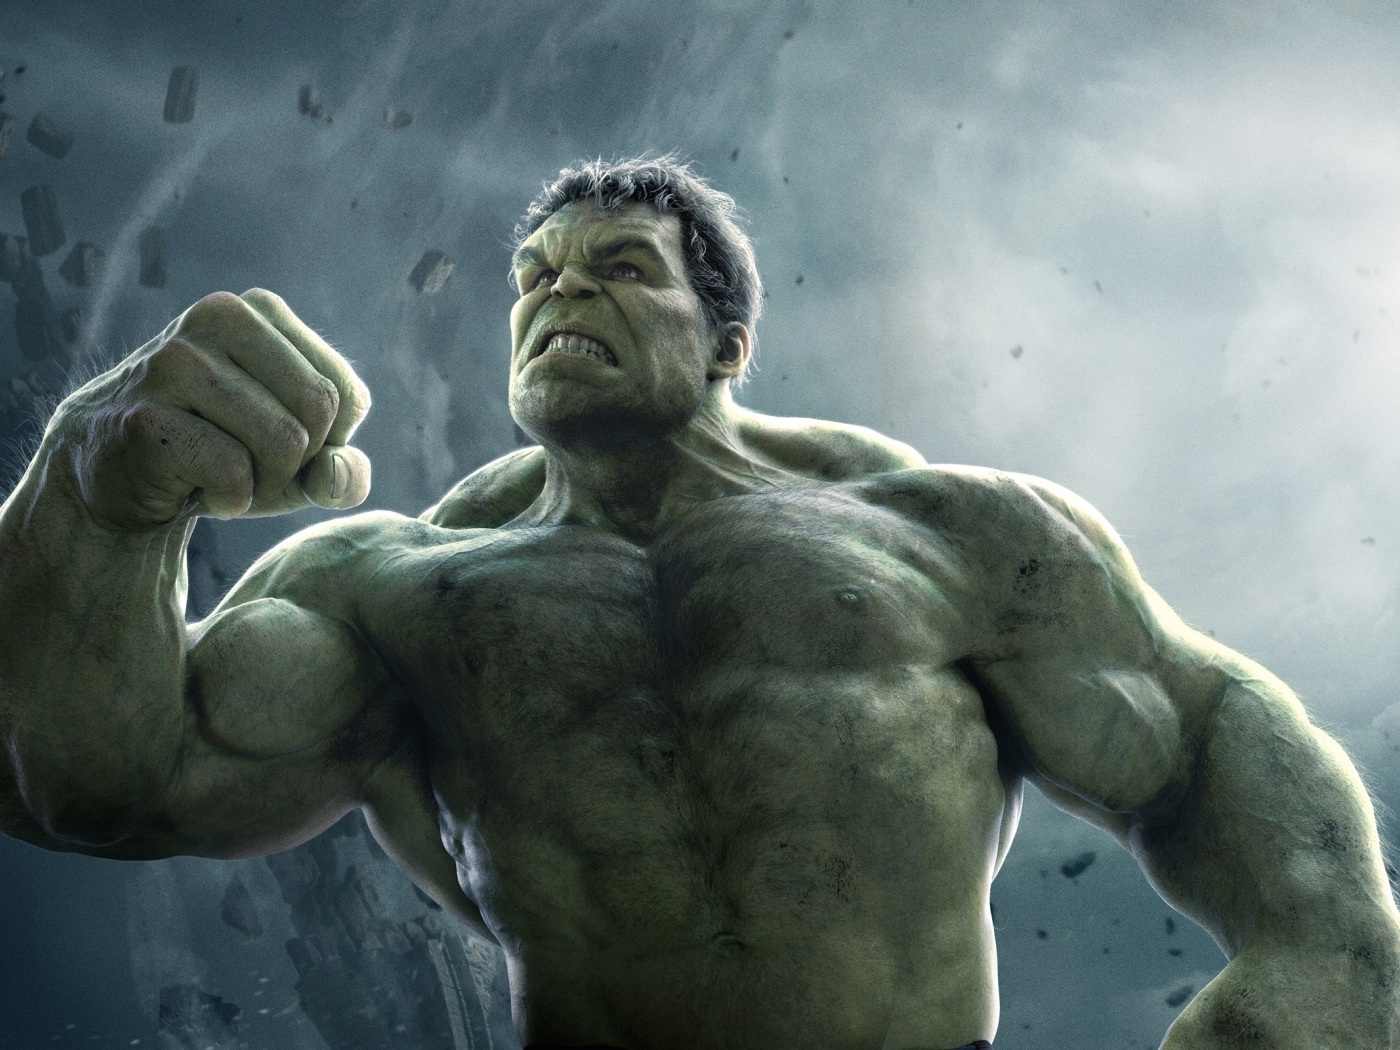 Hulk In Avengers Infinity War 2018, Full HD 2K Wallpaper